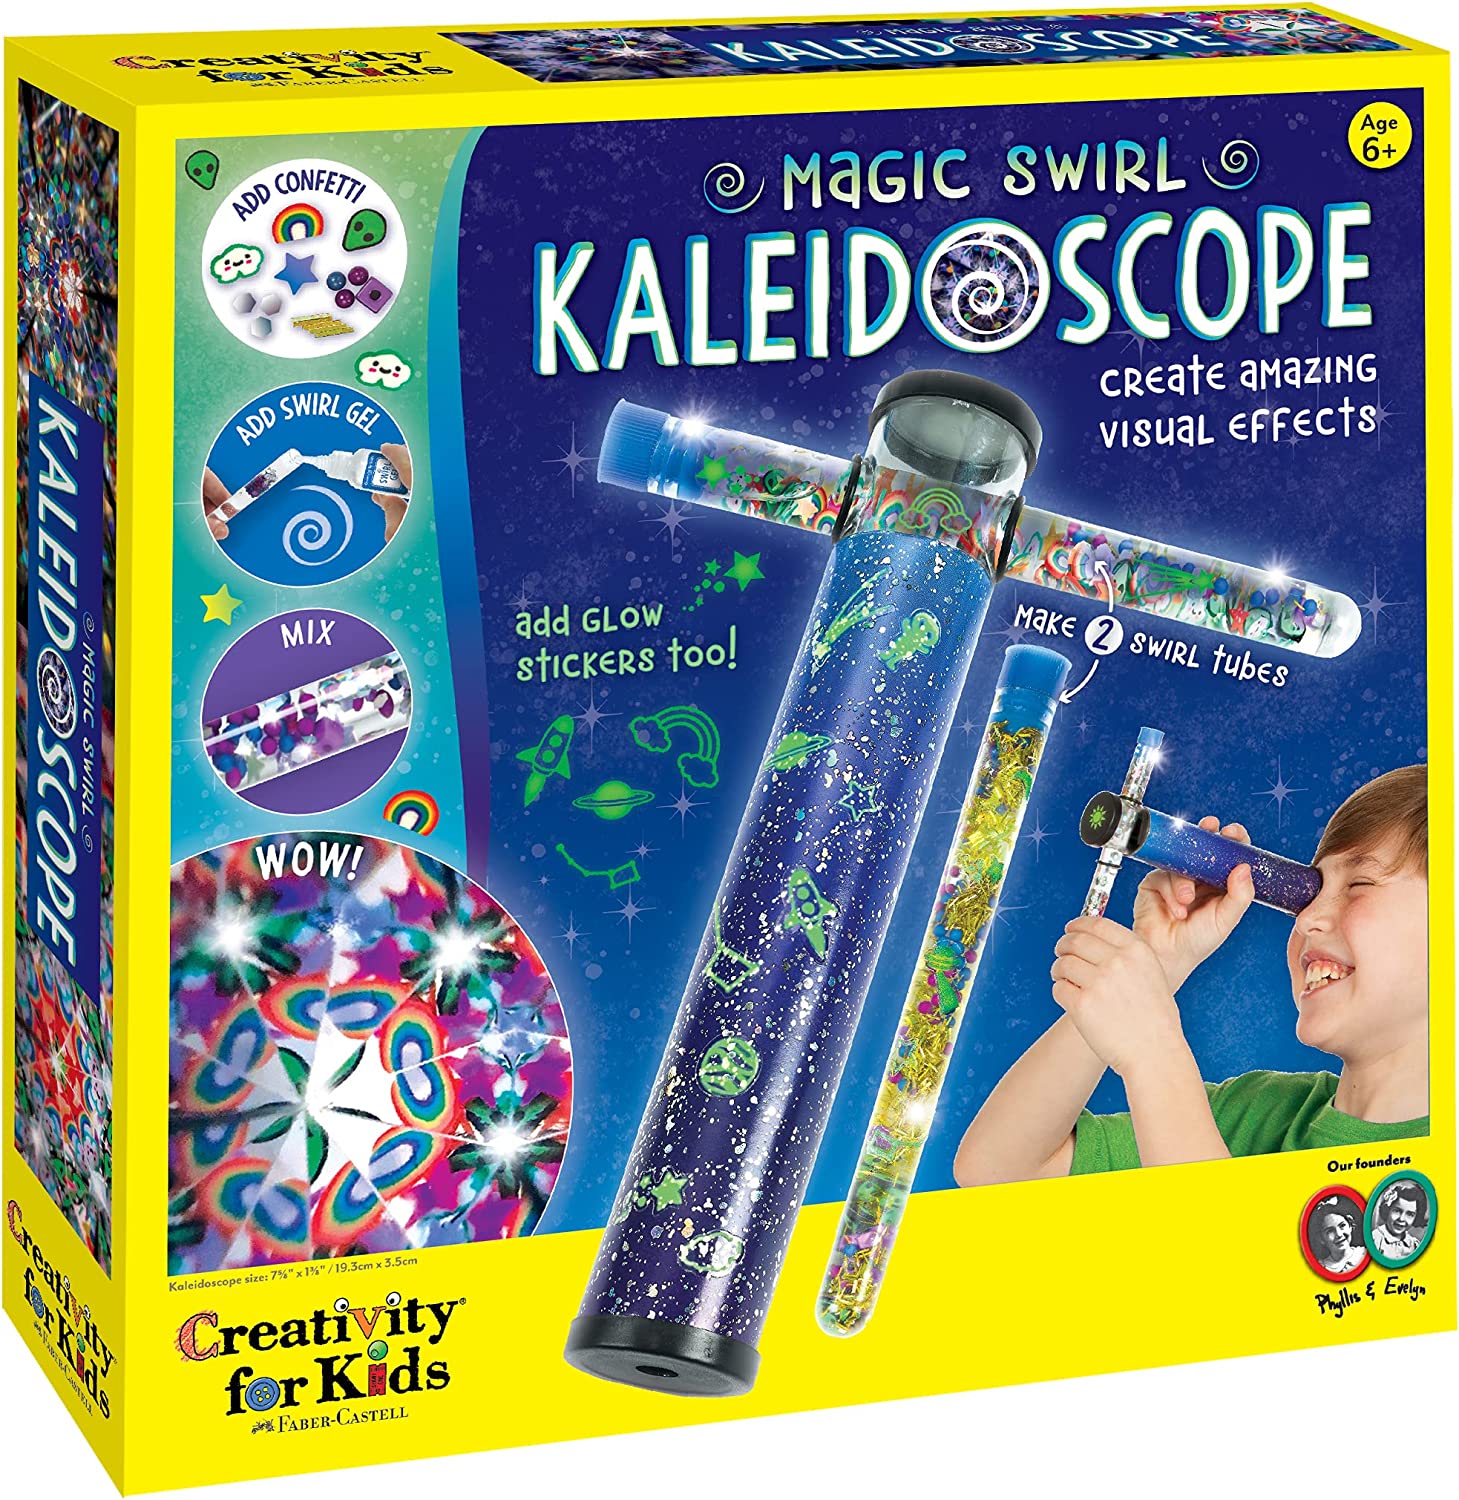 Creativity for Kids Magic Swirl Kaleidoscope Kit - Make Your Own Kaleidoscope for Kids, STEM Toys